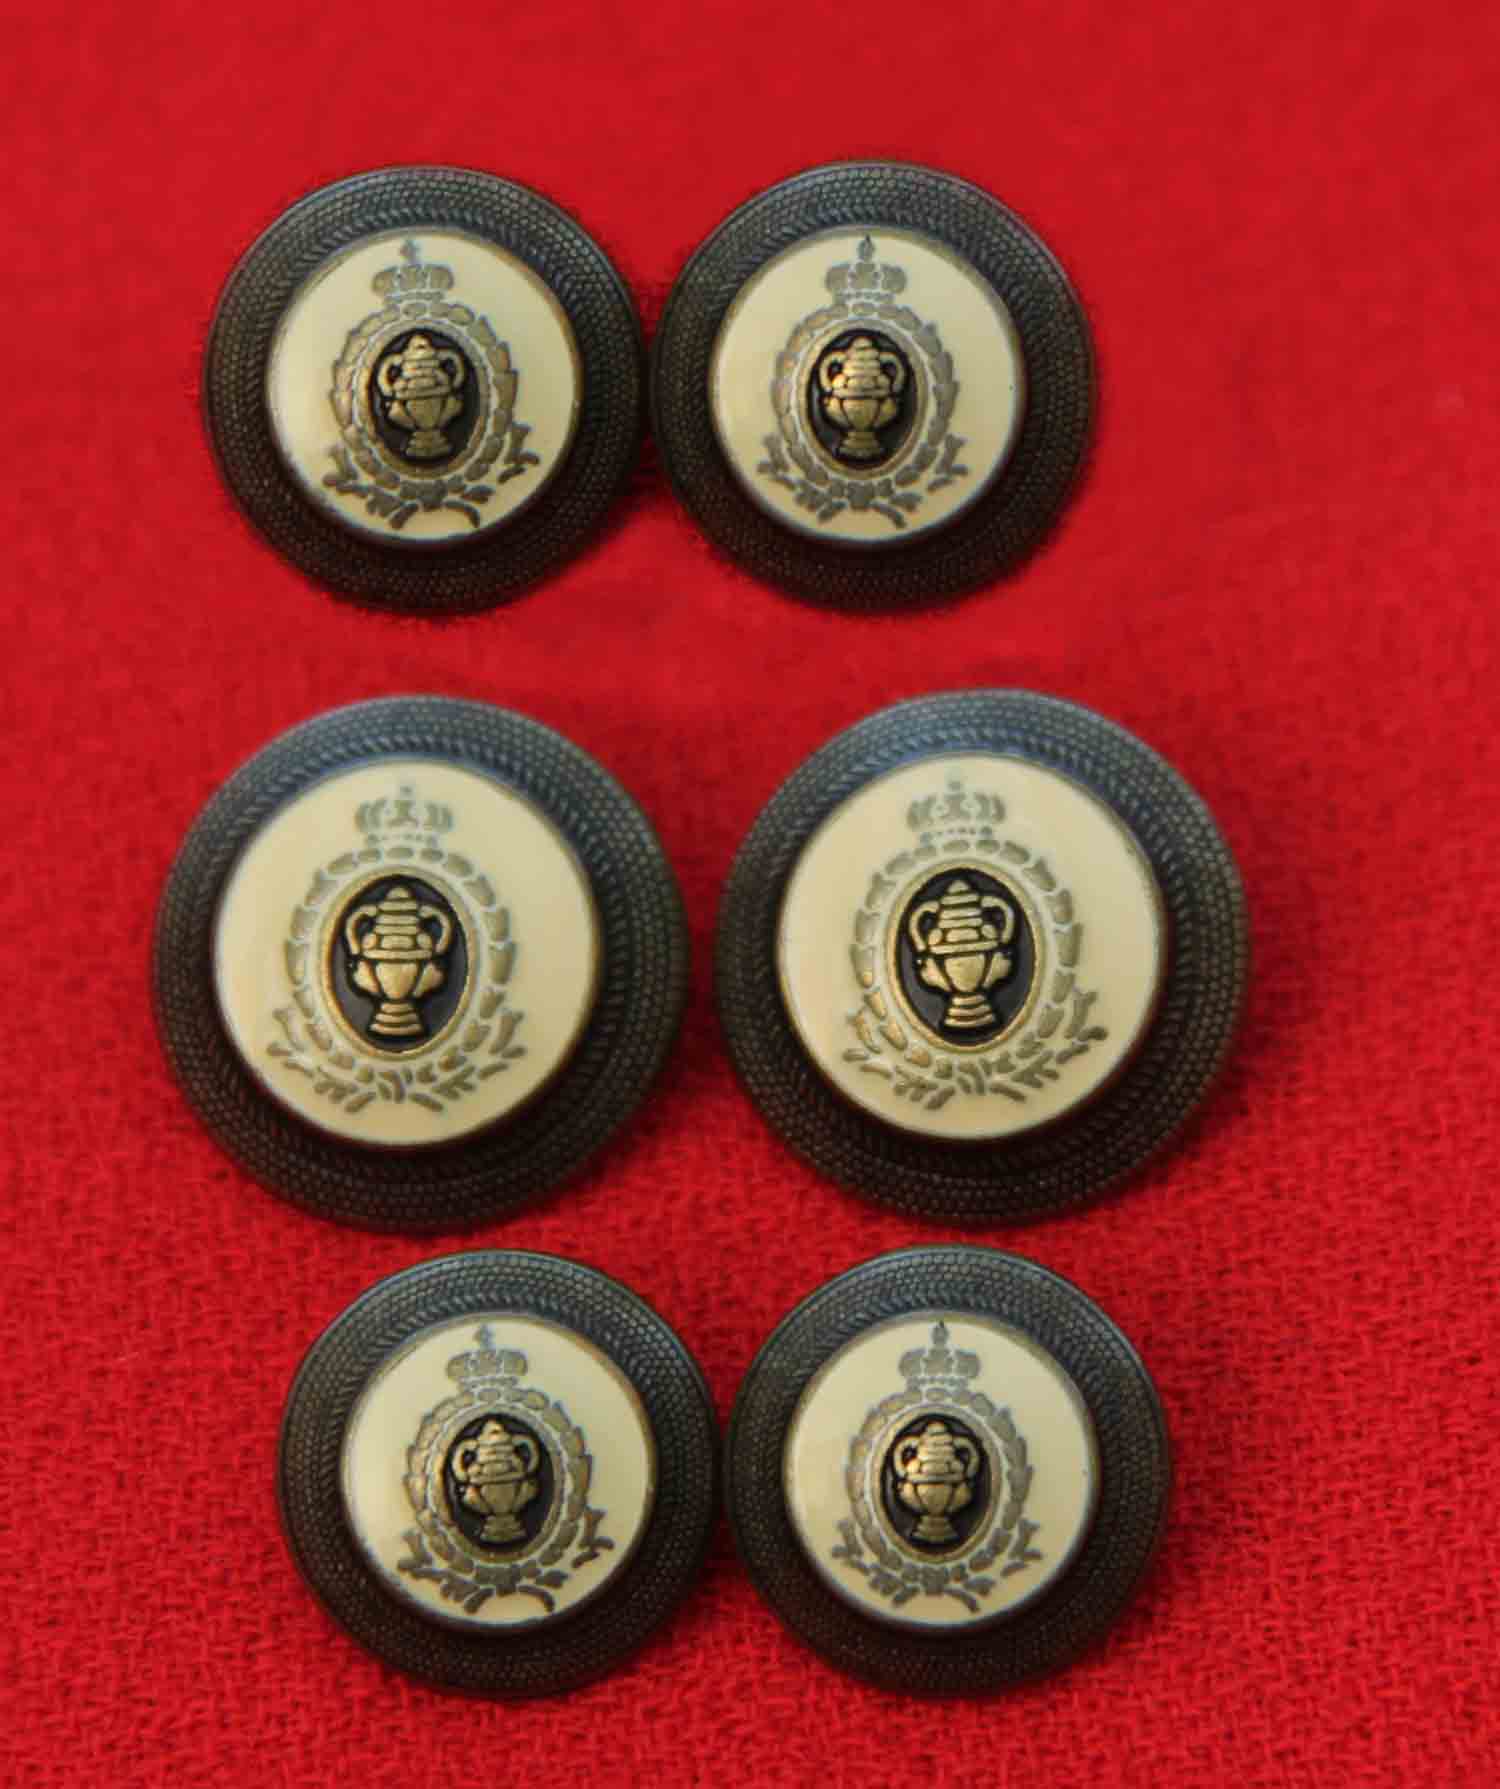 Vintage Aquascutum Semi-Dome Blazer Buttons Set Antique Gold Brown Cream Gray Men's